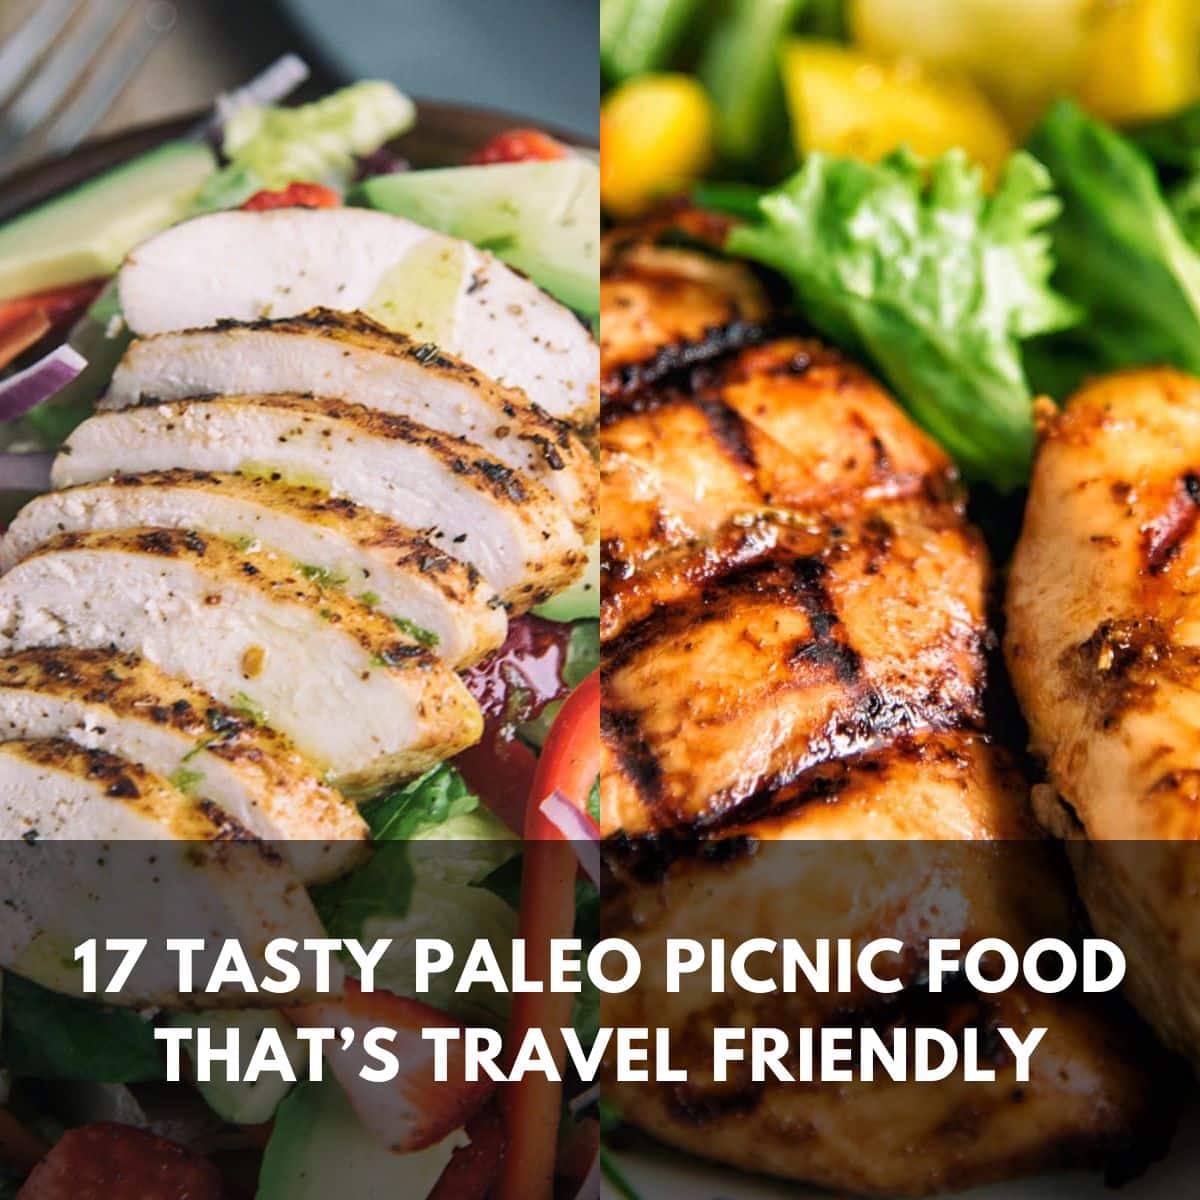 17 tasty paleo picnic food thats travel friendly main